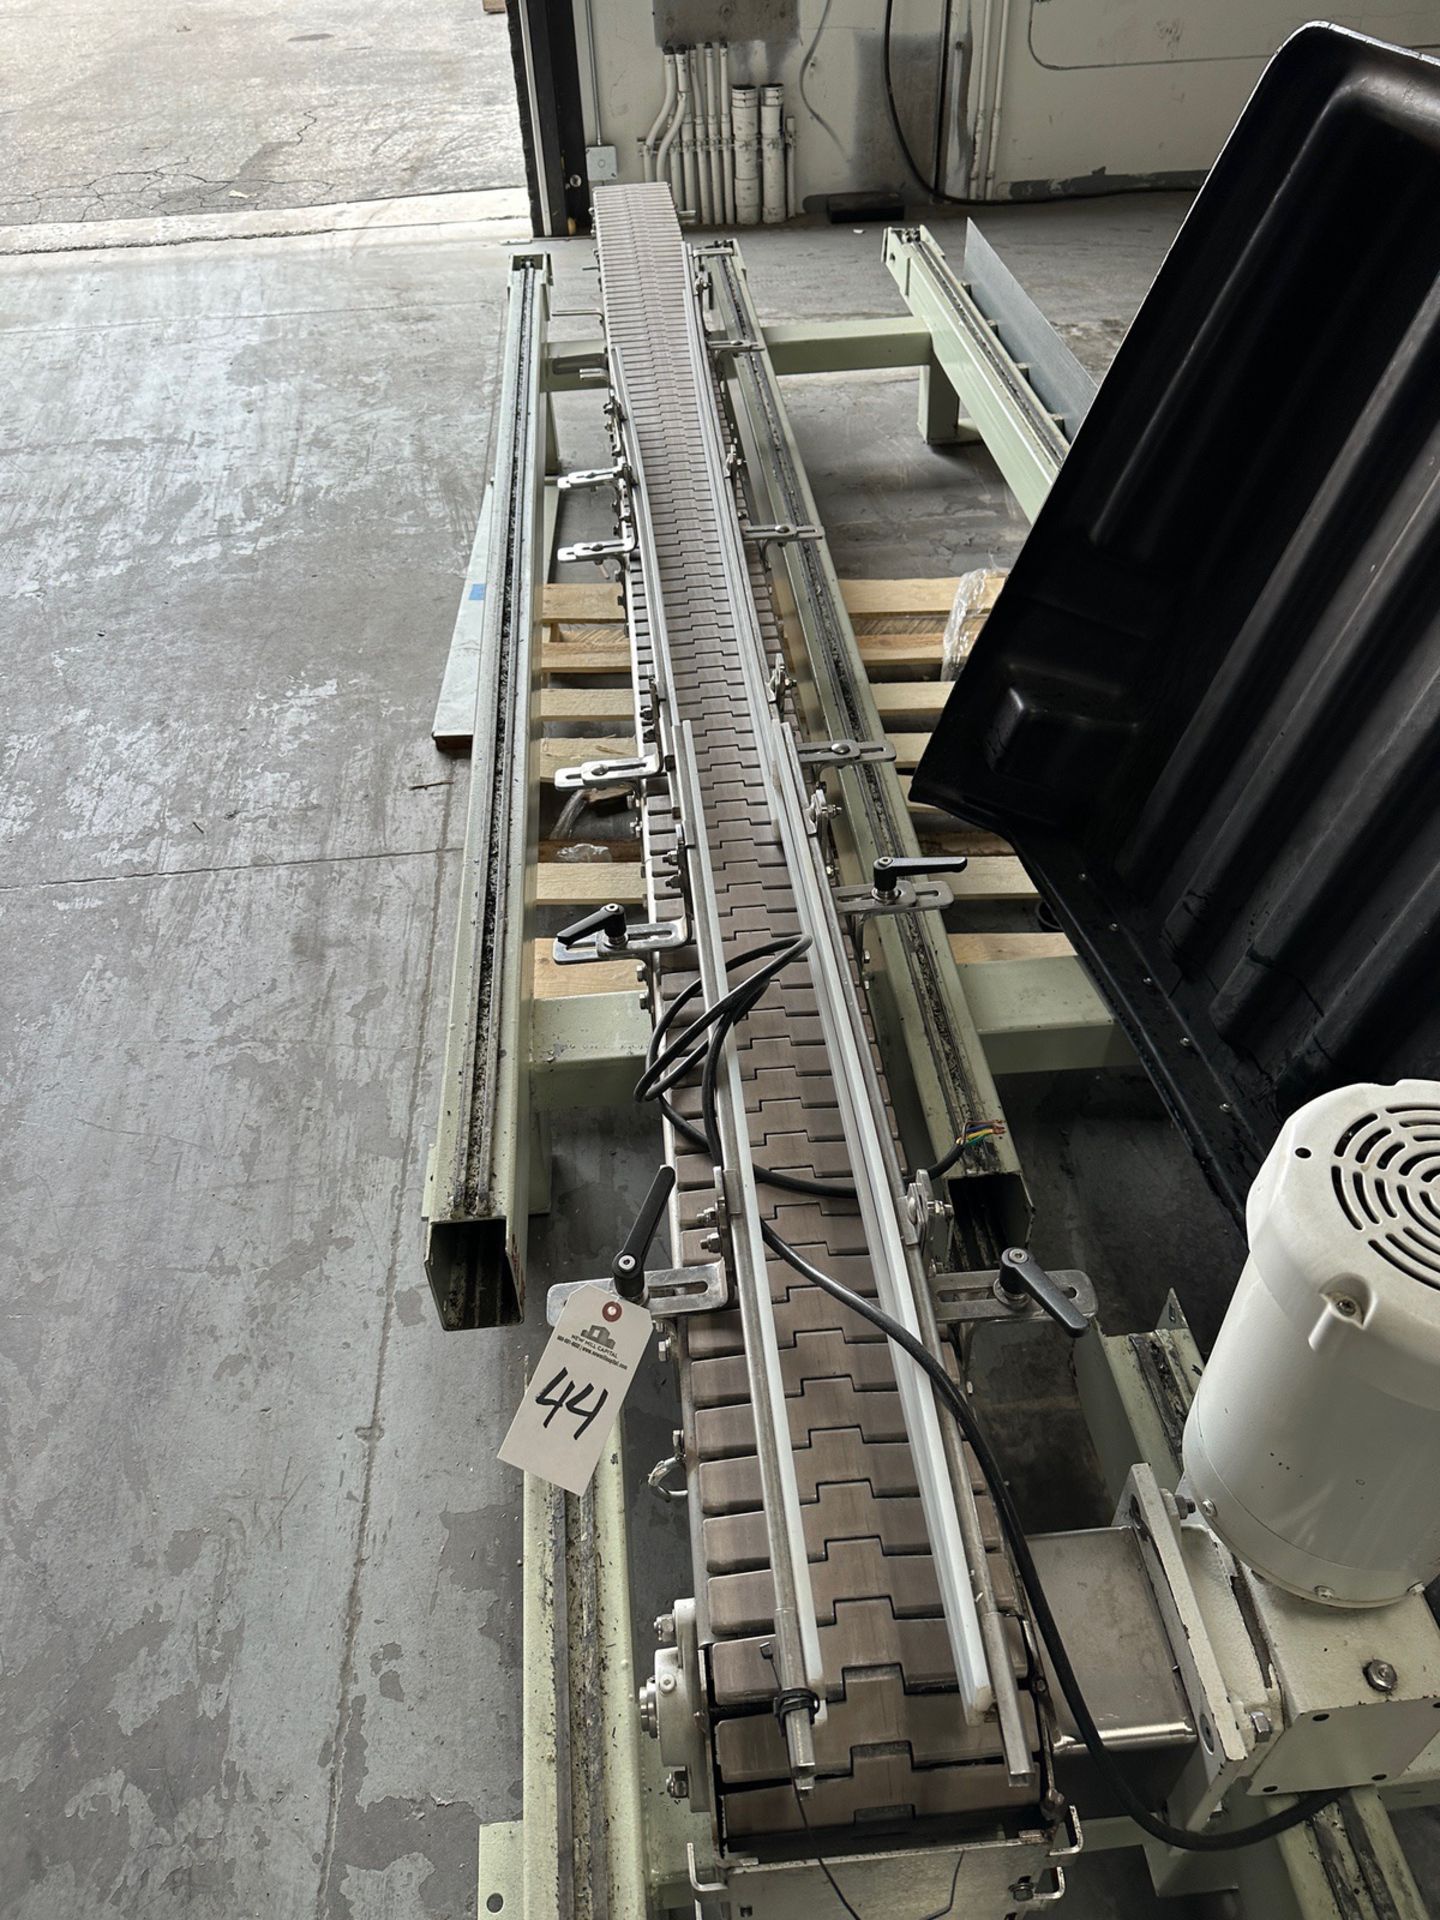 Arrowhead Conveyor Section with Leeson Drive - Approx 7.5" Belt x 12'6" O.L. | Rig Fee $125